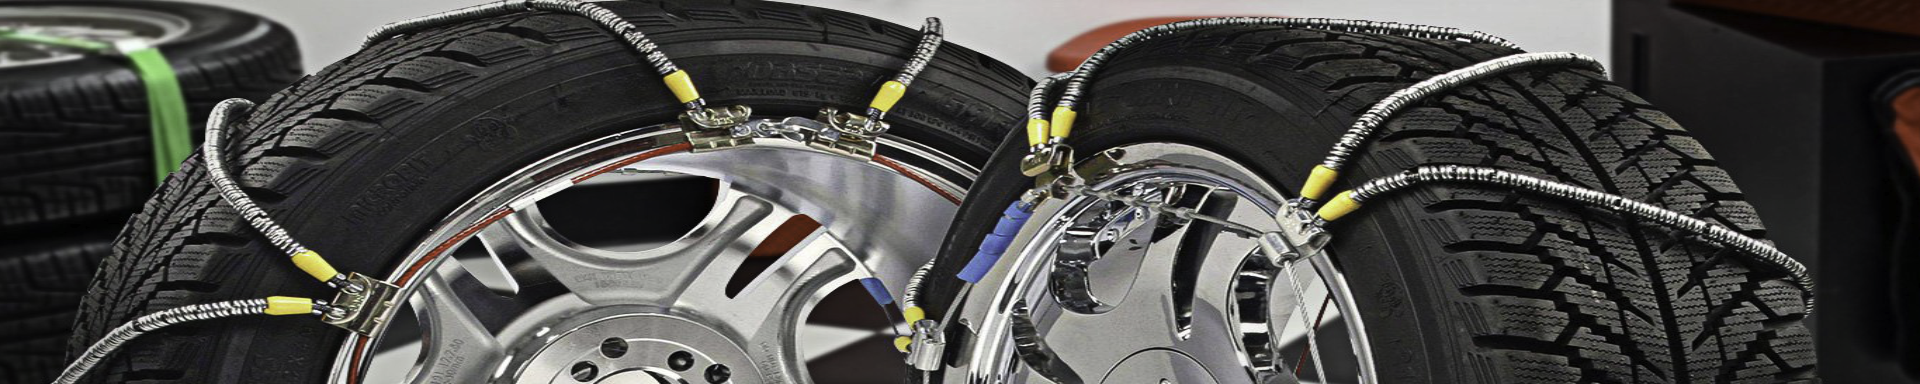 Tire Cables | GarageAndFab.com | Munro Industries gf-100103080703